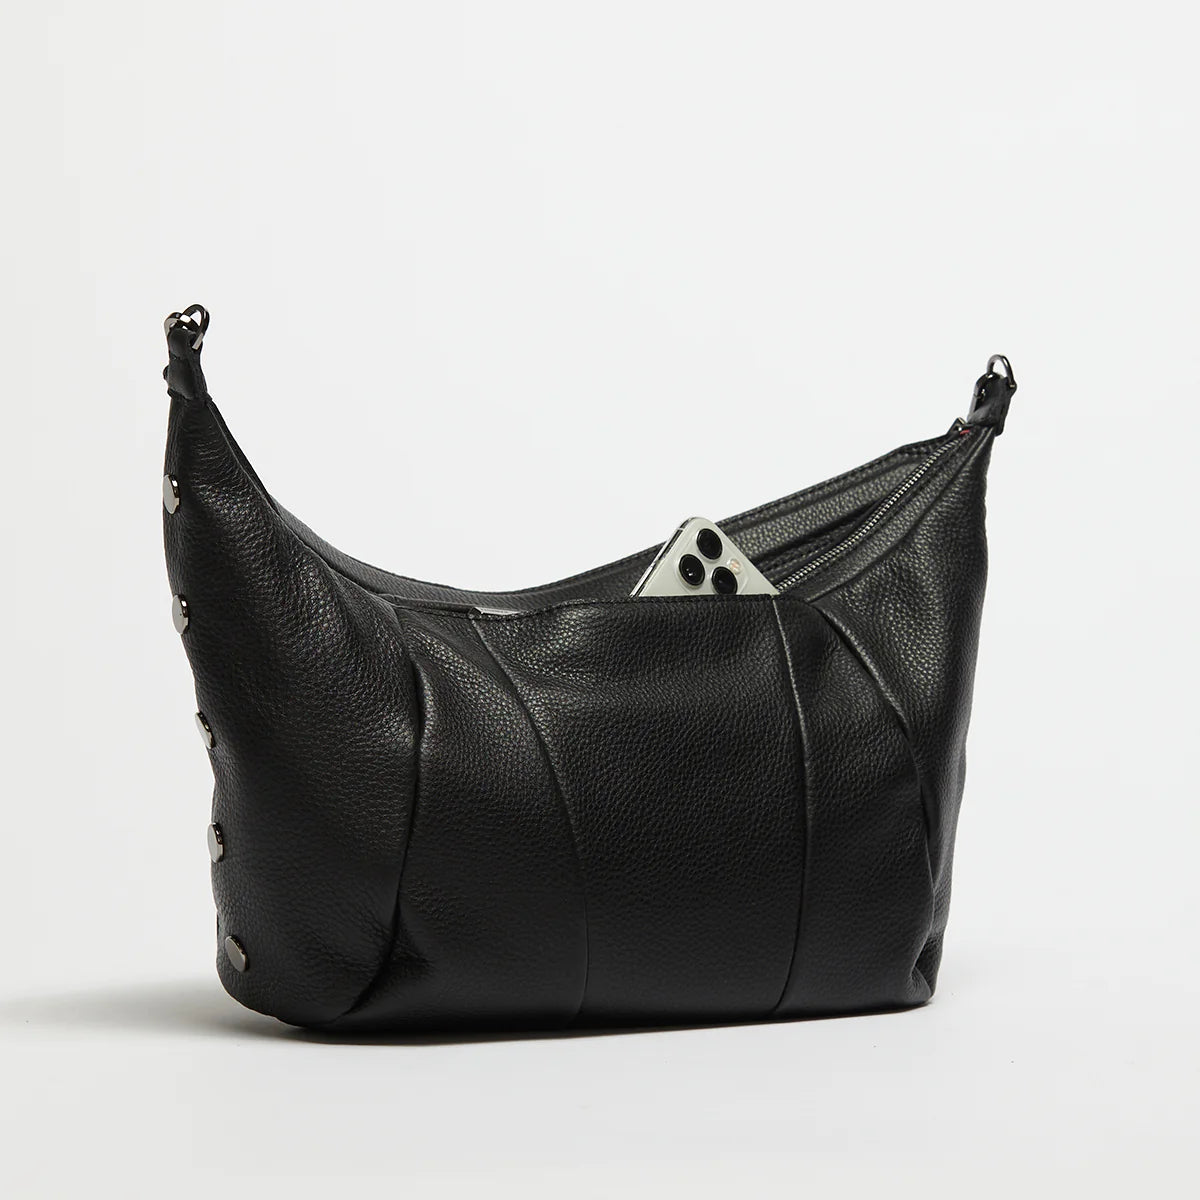 Load image into Gallery viewer, MORGAN Shoulder Bag in Black/Gunmetal
